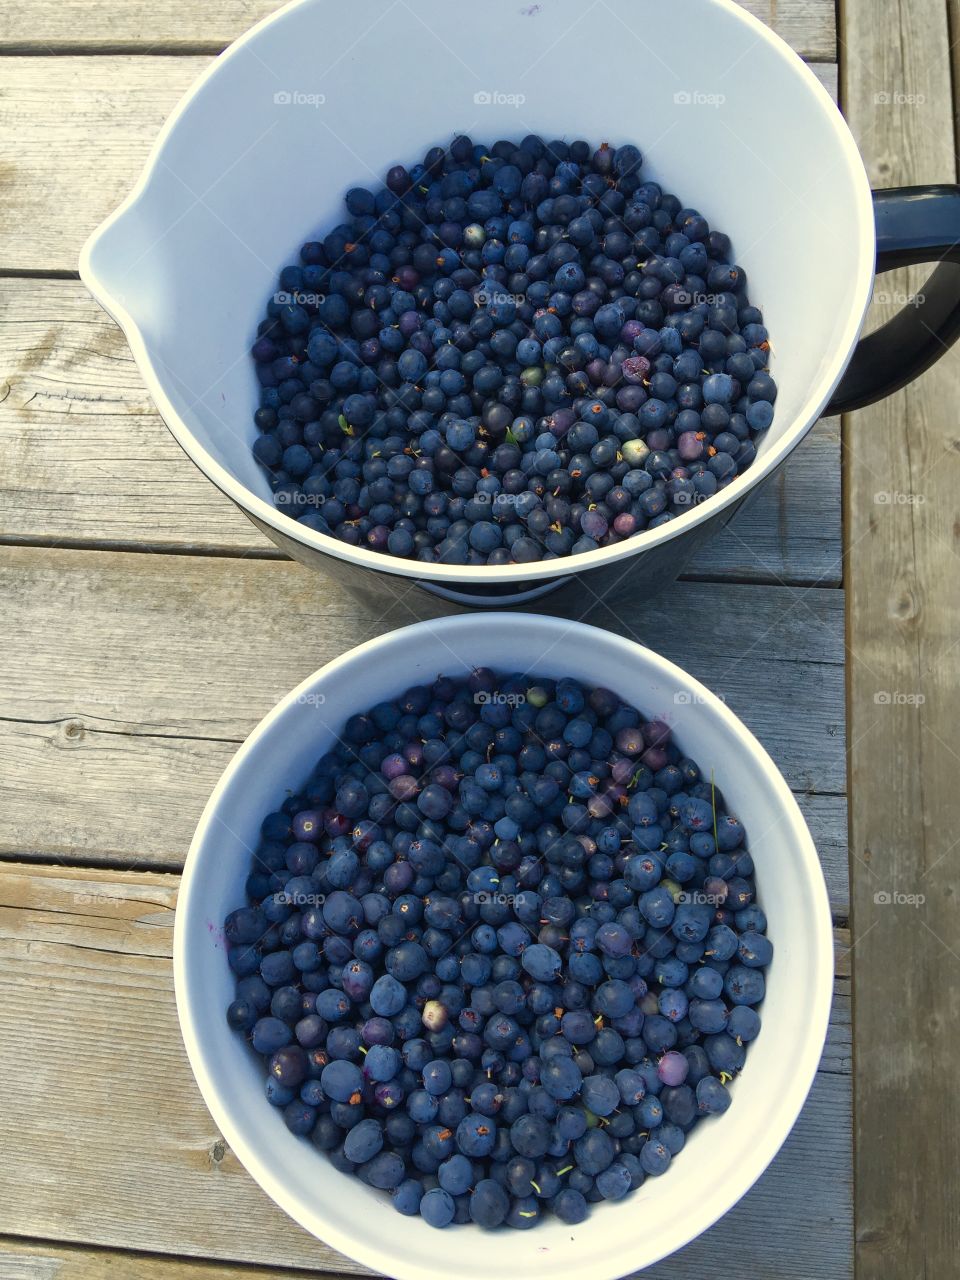 Buckets of blueberries 